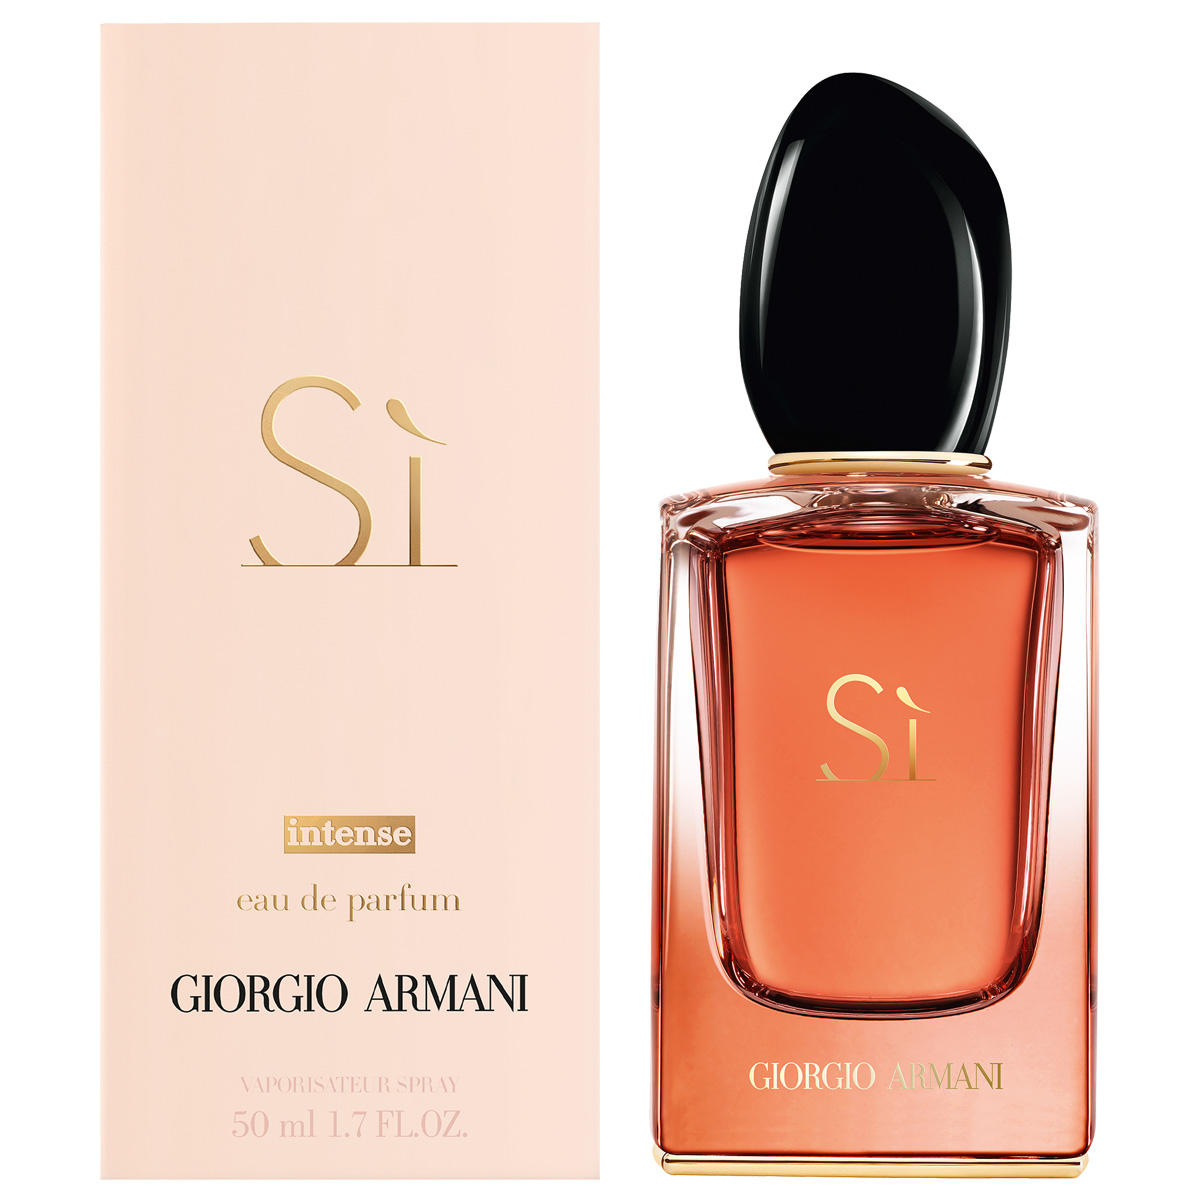 Giorgio Armani Sì Intense Eau de Parfum 50 ml - 2